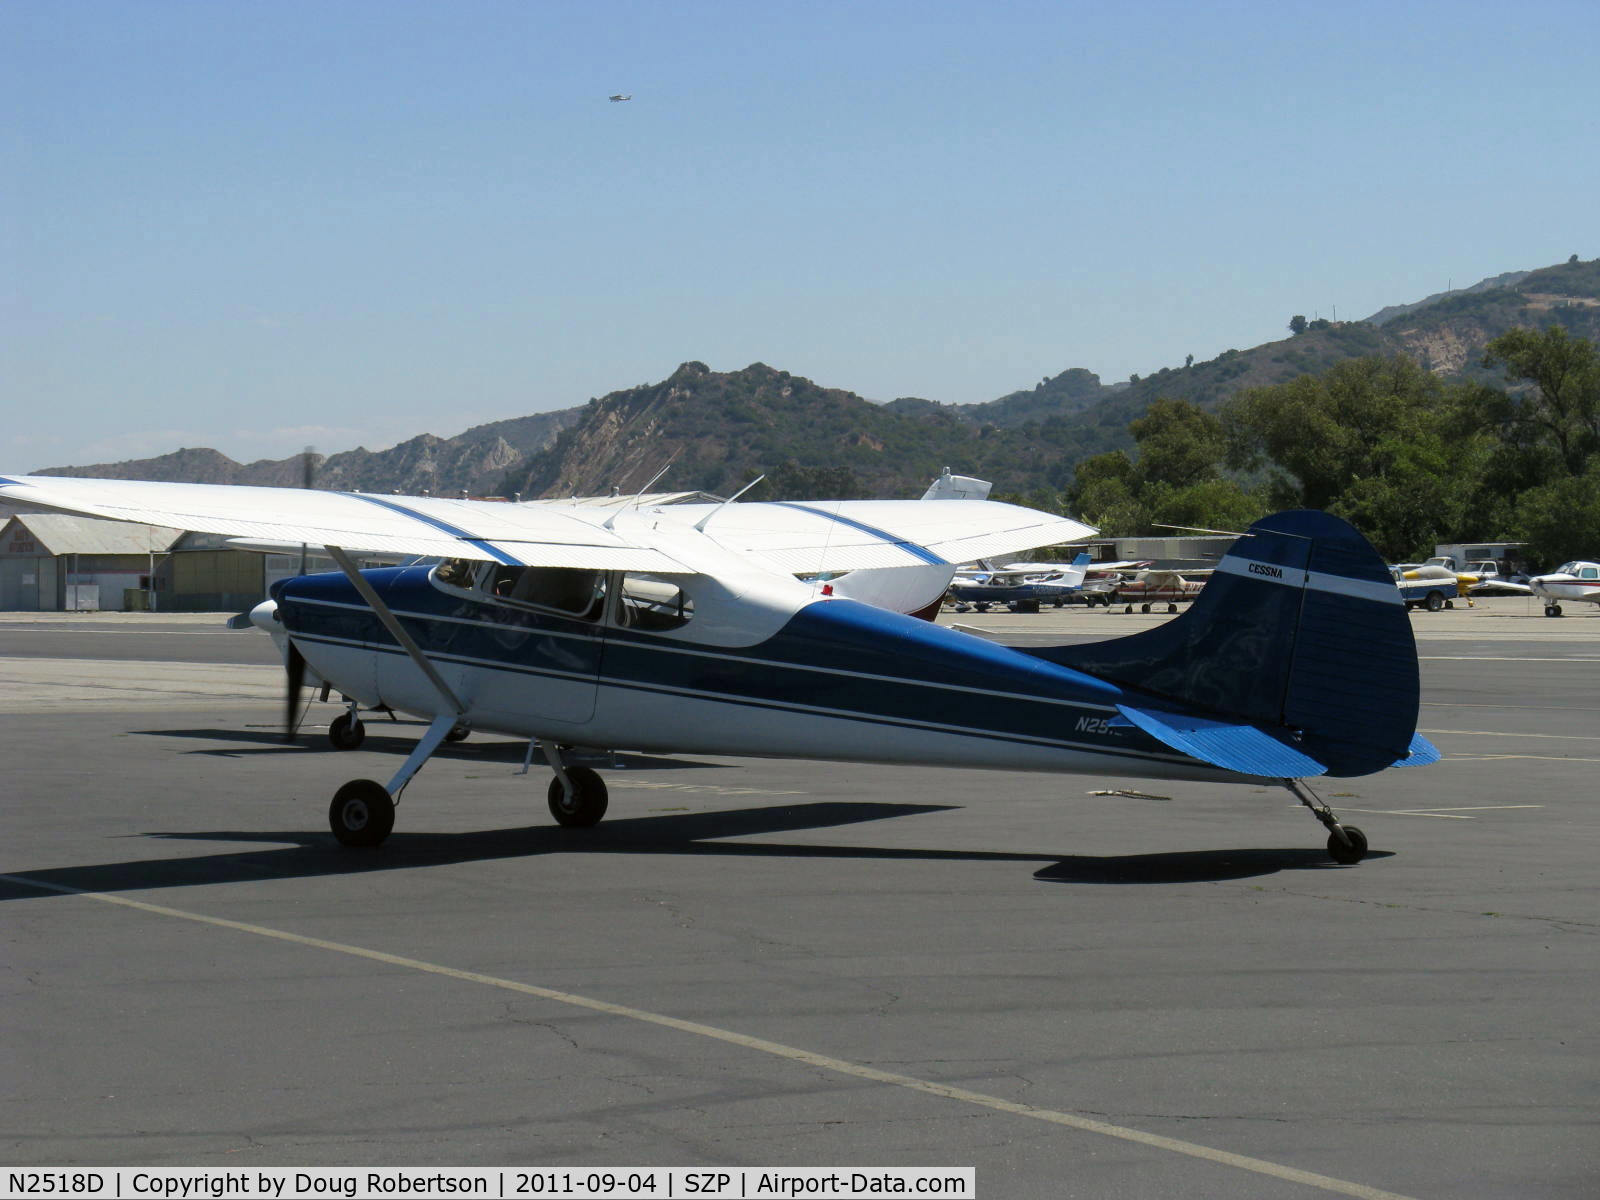 N2518D, 1952 Cessna 170B C/N 20670, 1952 Cessna 170B, Continental C-145-2 145 Hp, taxi